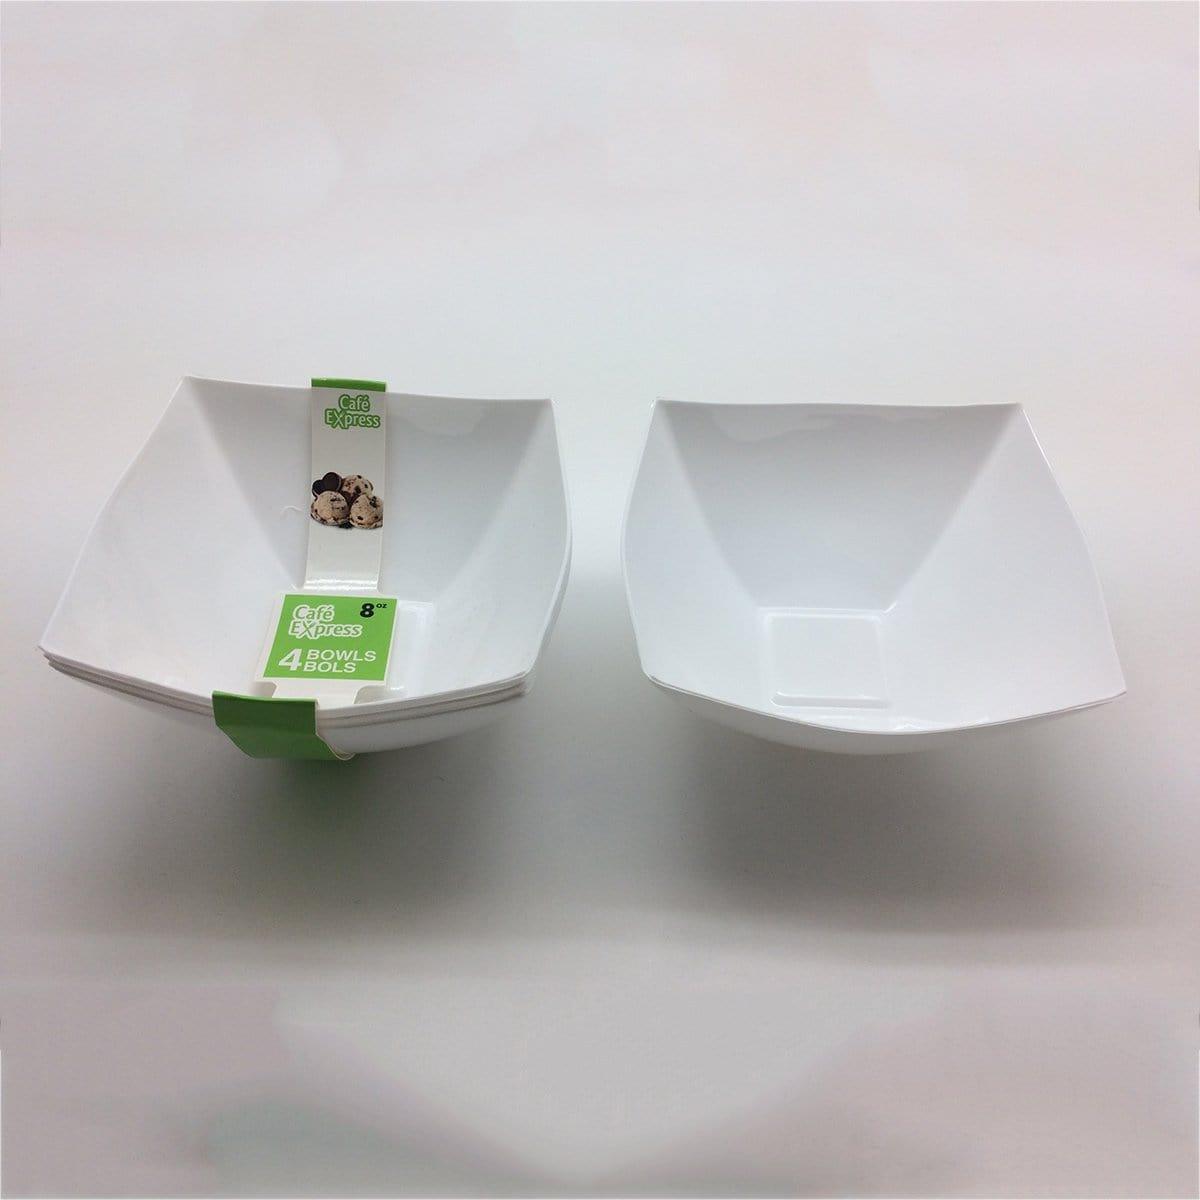 Buy Plasticware Plastic Square Bowls - White 8 oz 4/pkg sold at Party Expert